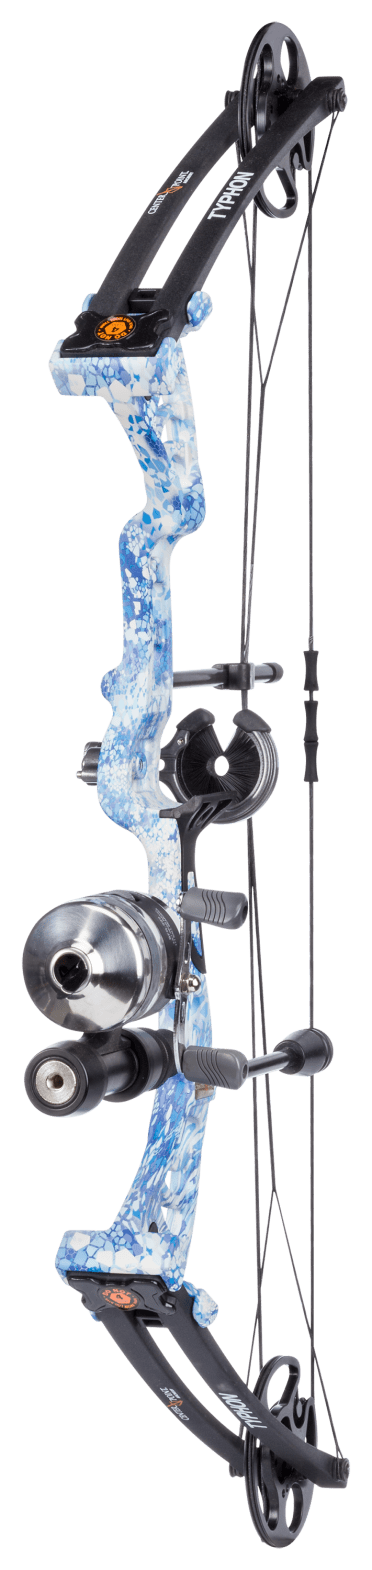 Bowfishing Bows & Bowfishing Packages